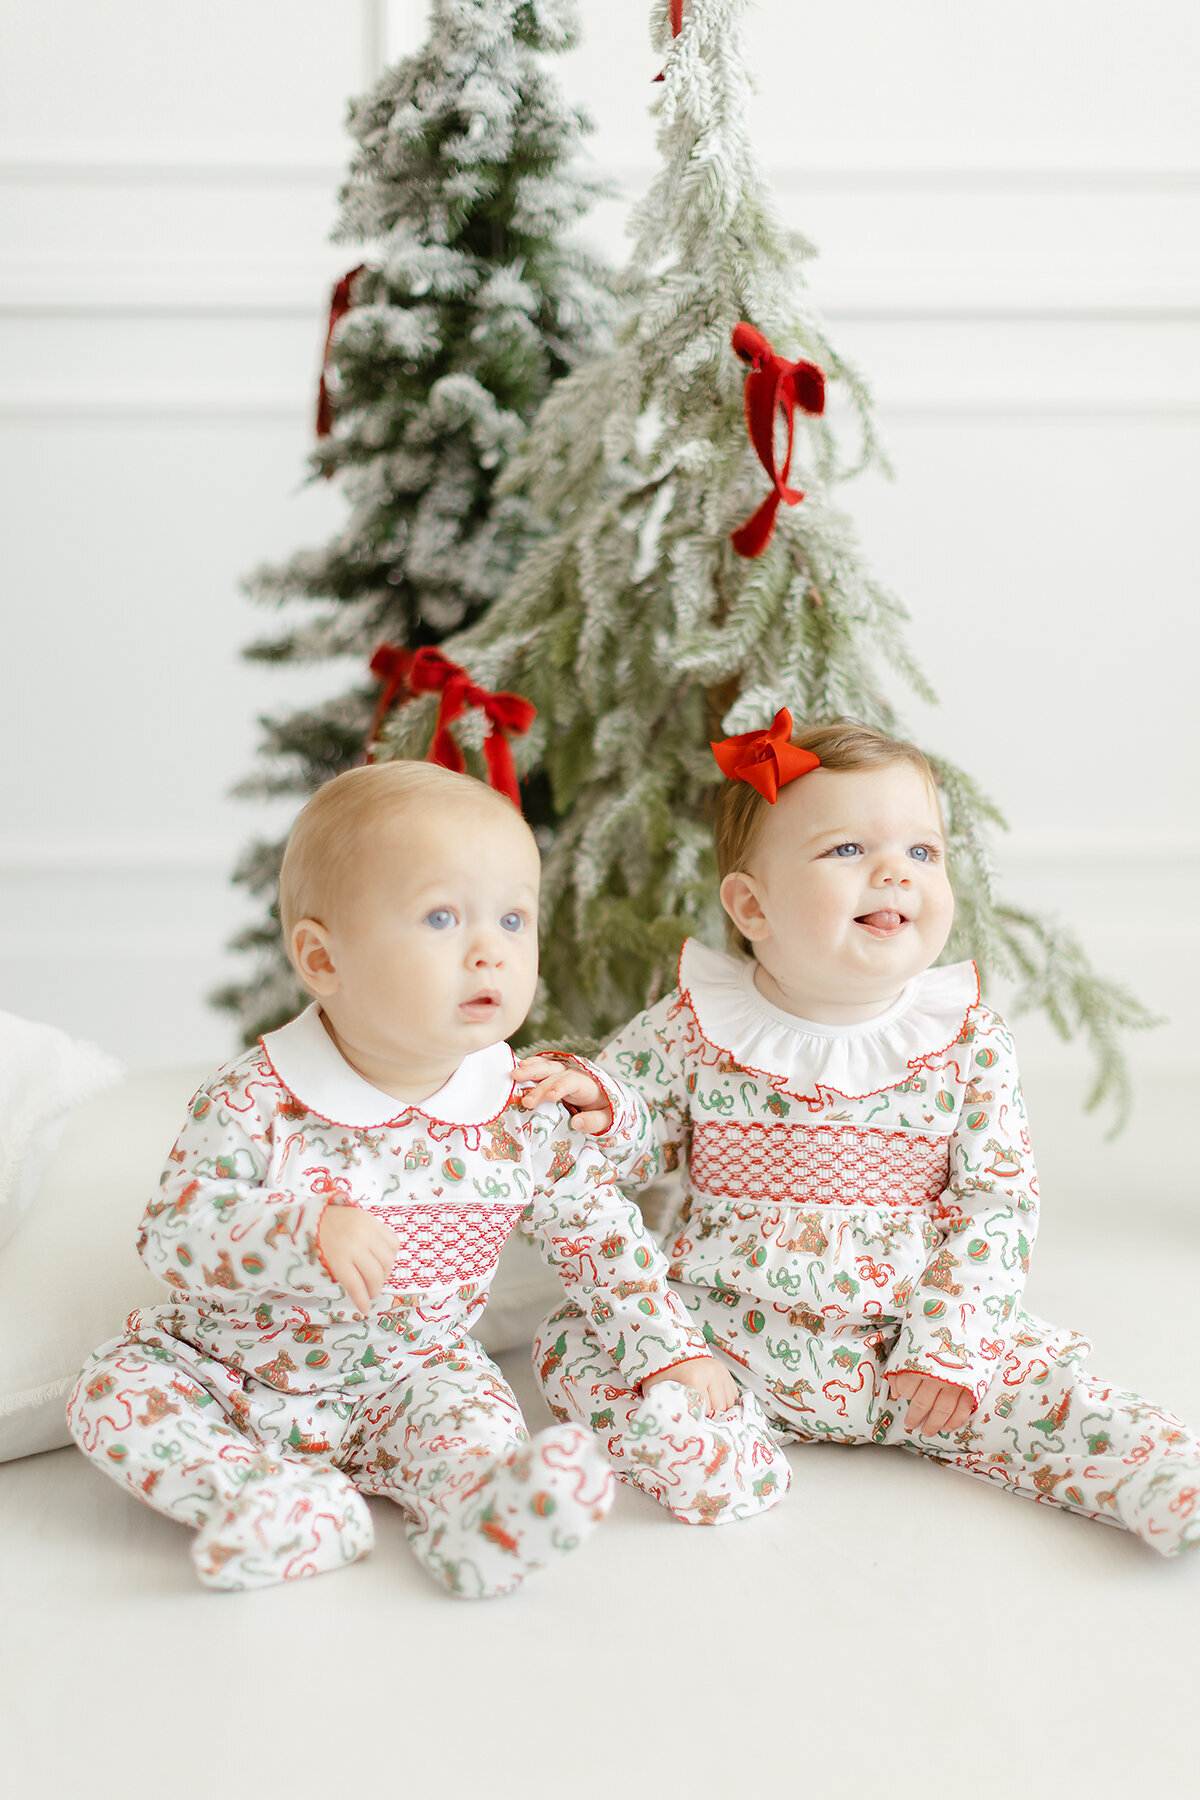 Professional branding photo of 2 babies modeling Dondolo christmas clothing